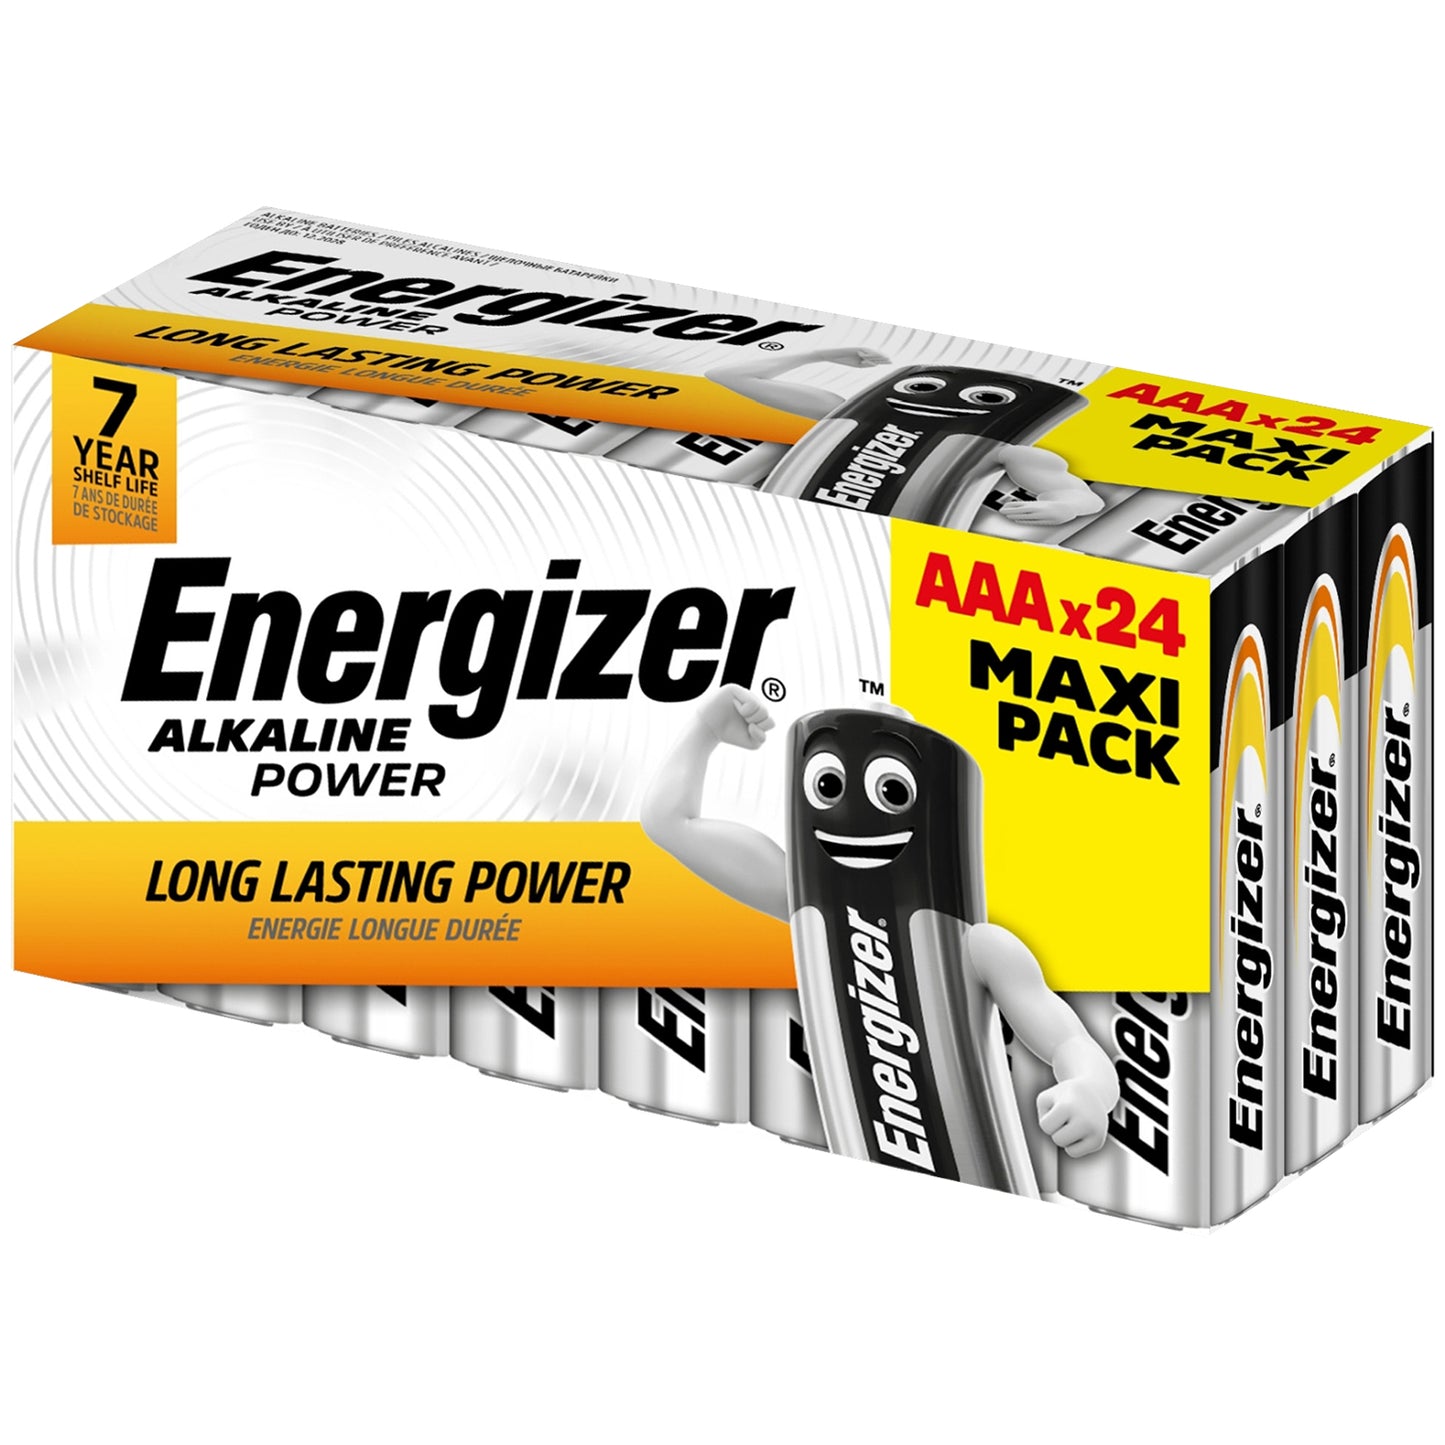 Energizer Power Alkaline AAA Batteries - Pack of 24 - maplin.co.uk